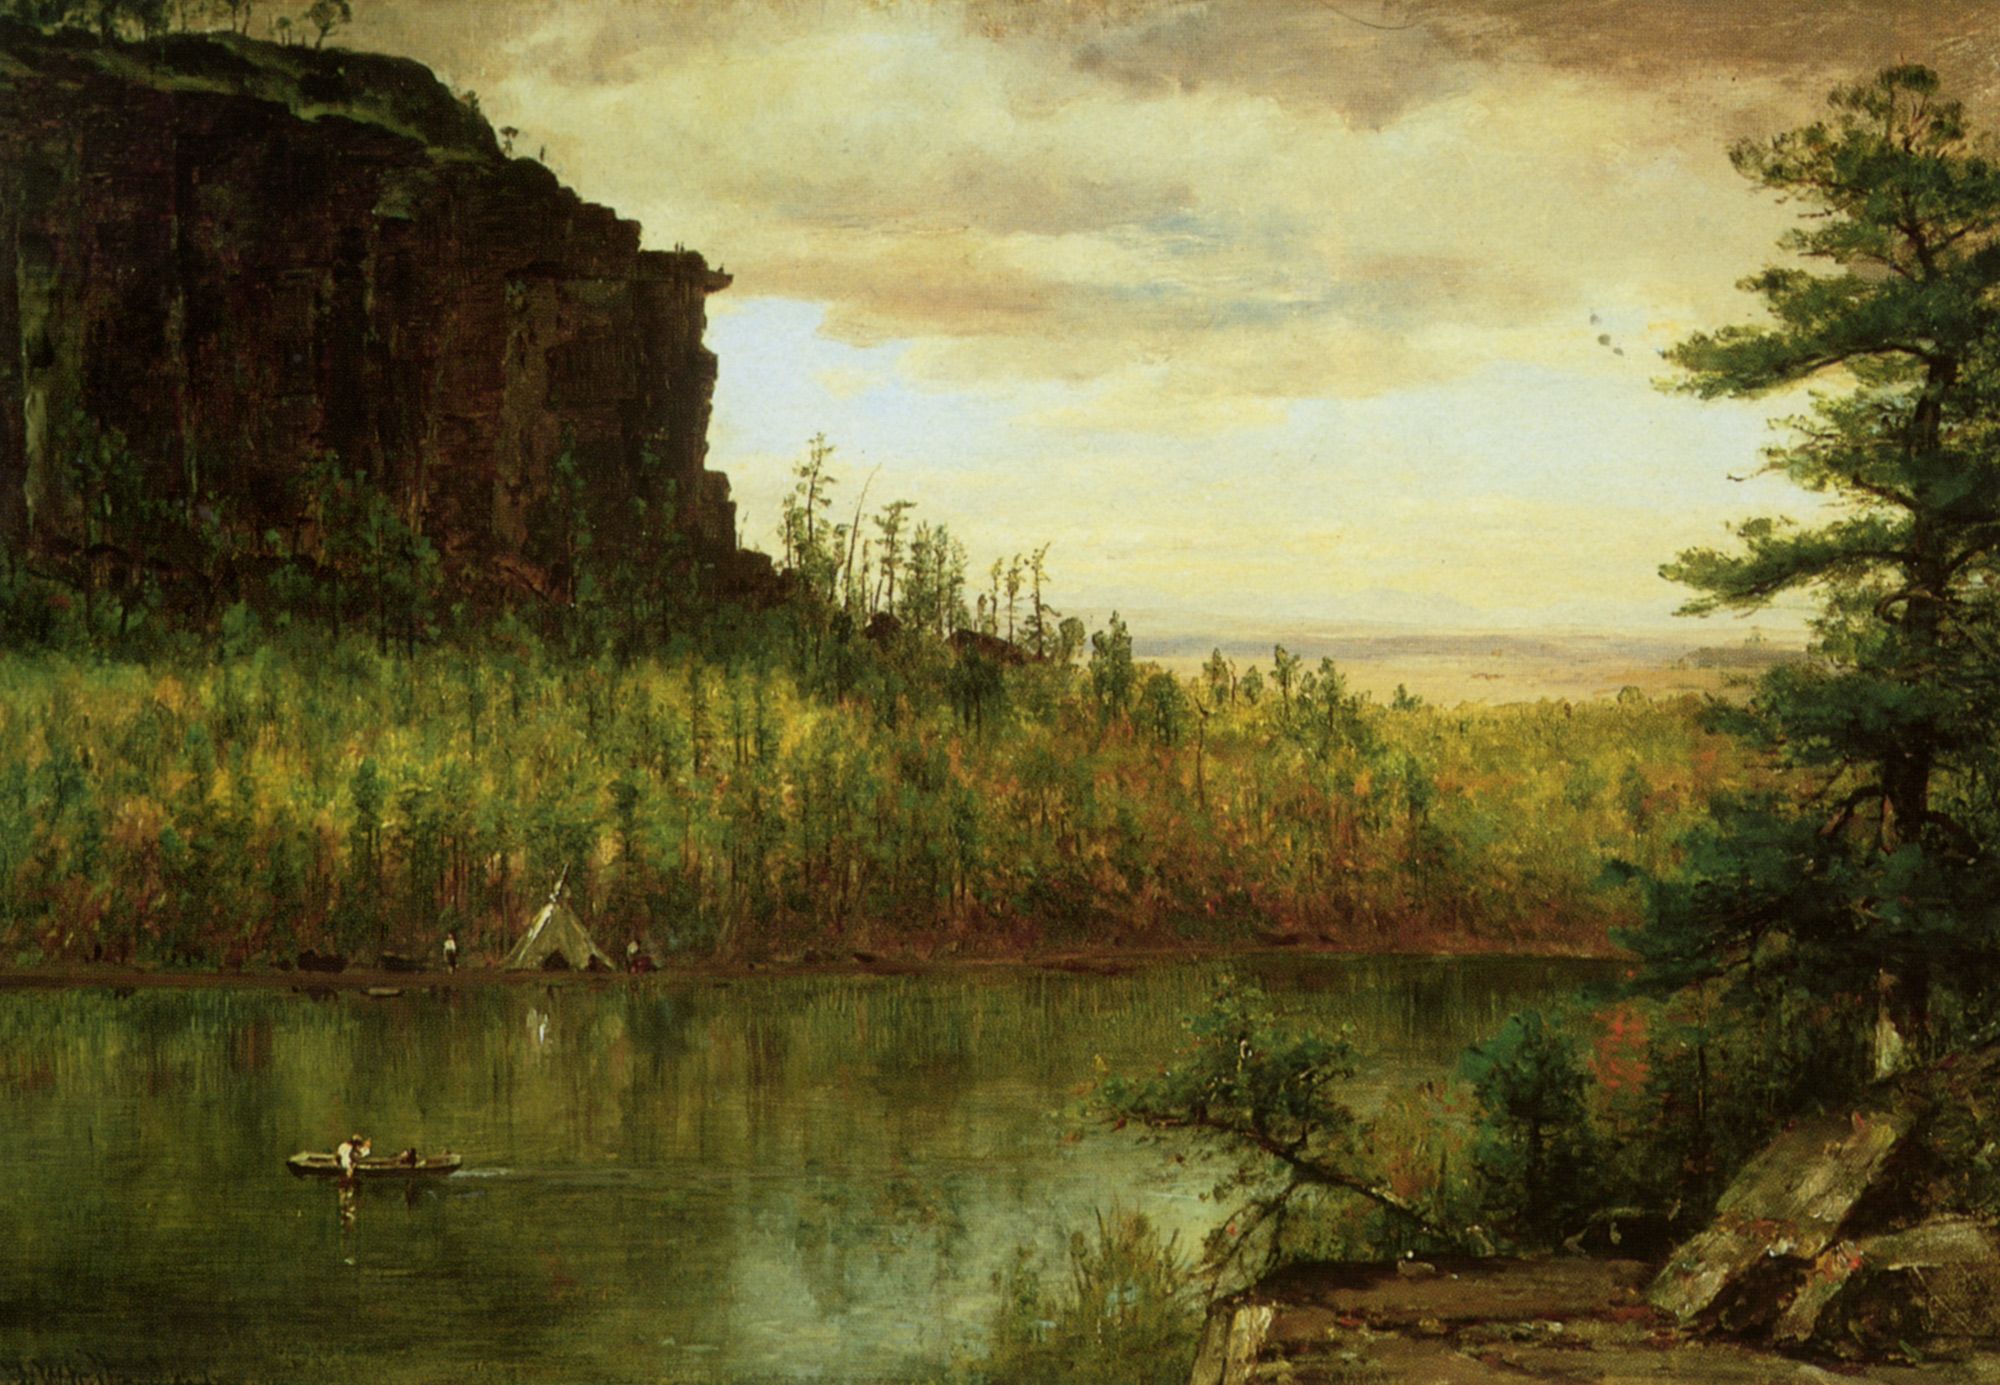 Landscape near Fort Collins by Thomas Worthington Whittredge